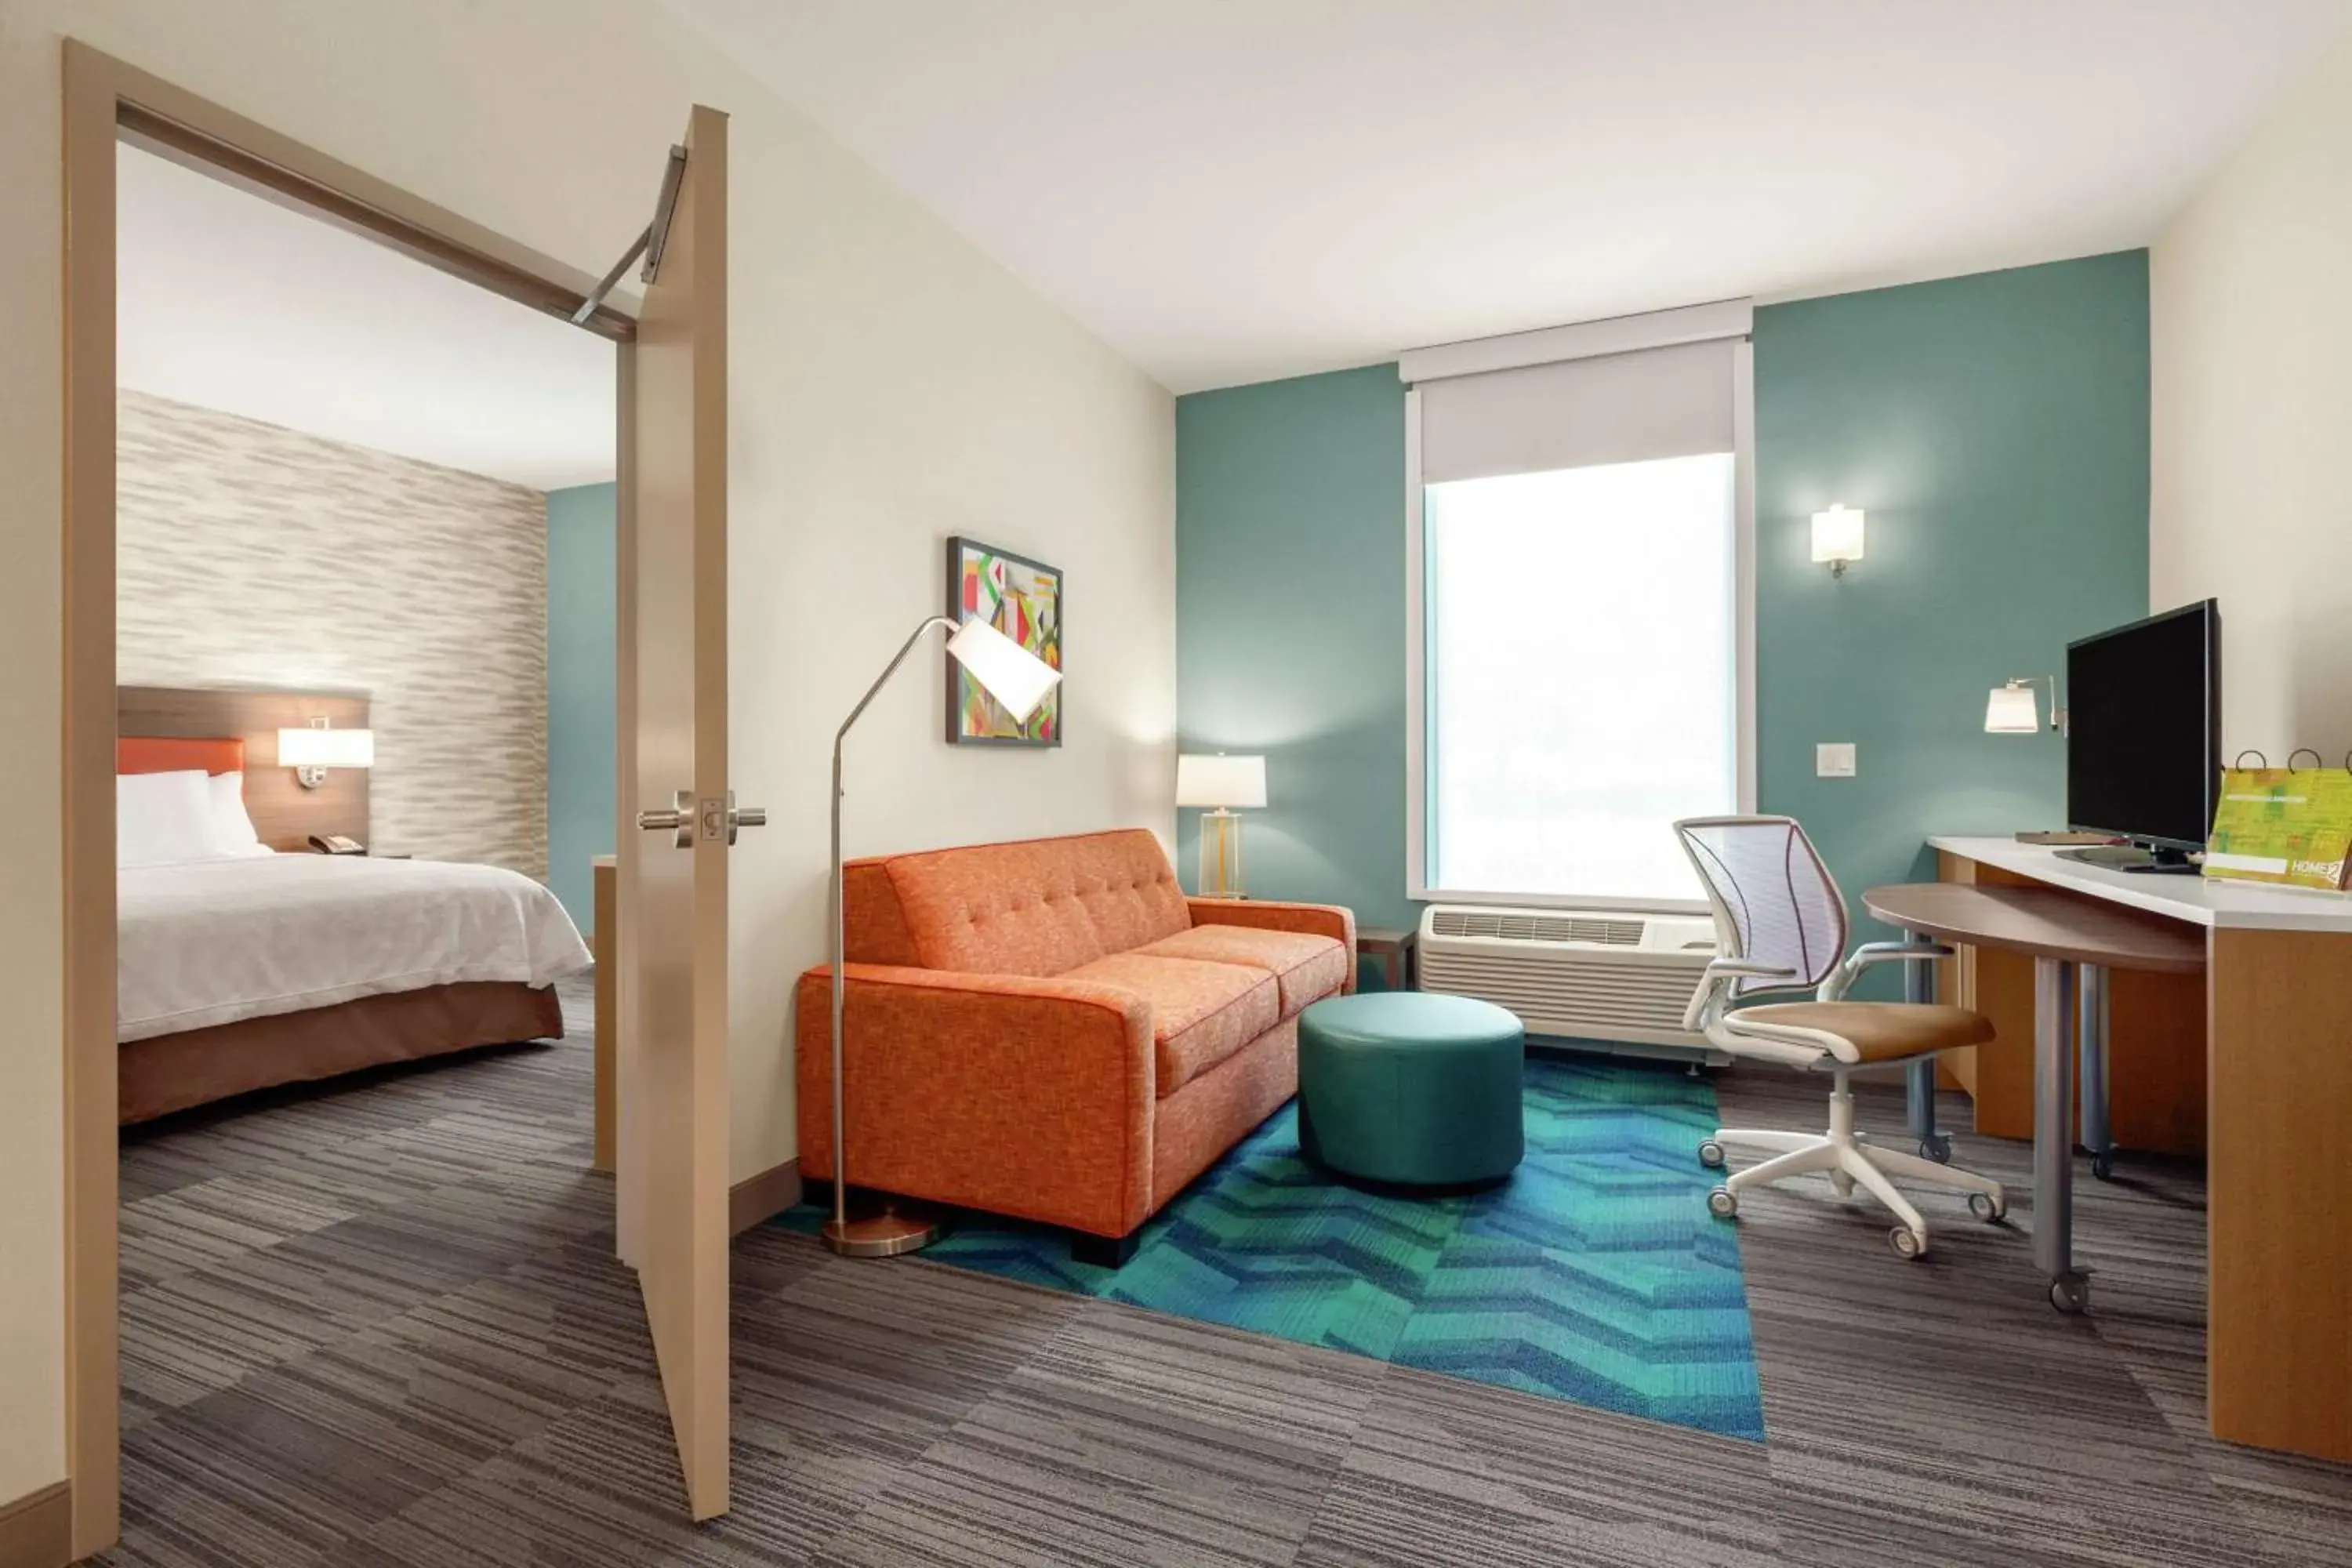 Bedroom, TV/Entertainment Center in Home2 Suites by Hilton Sarasota - Bradenton Airport, FL